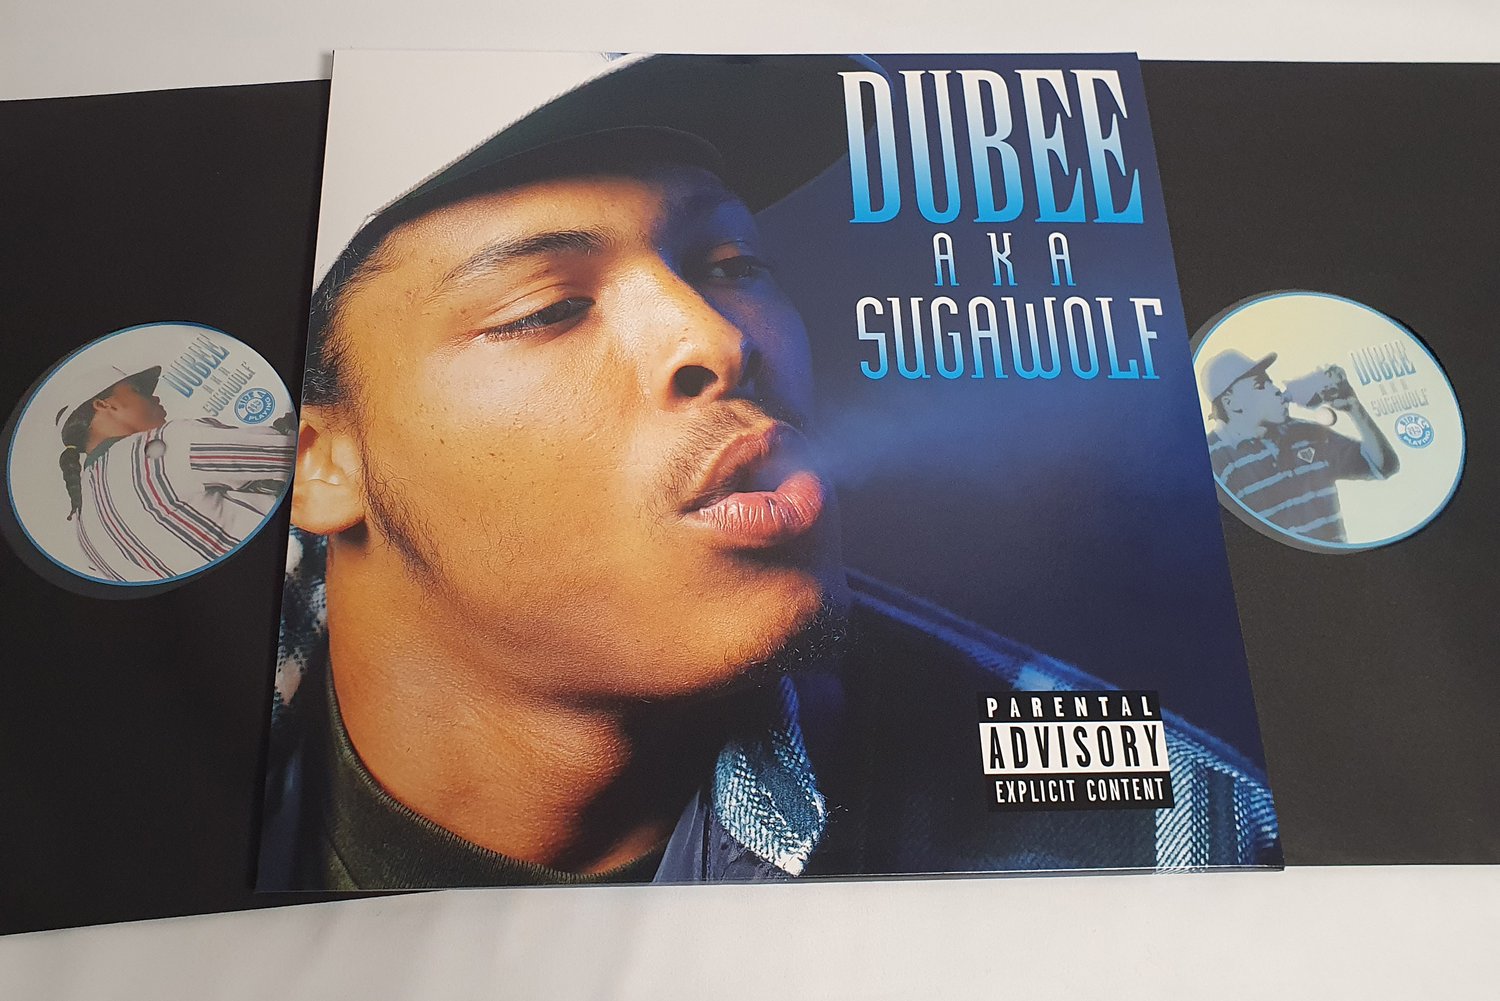 Image of Dubee aka Sugawolf Vinyl